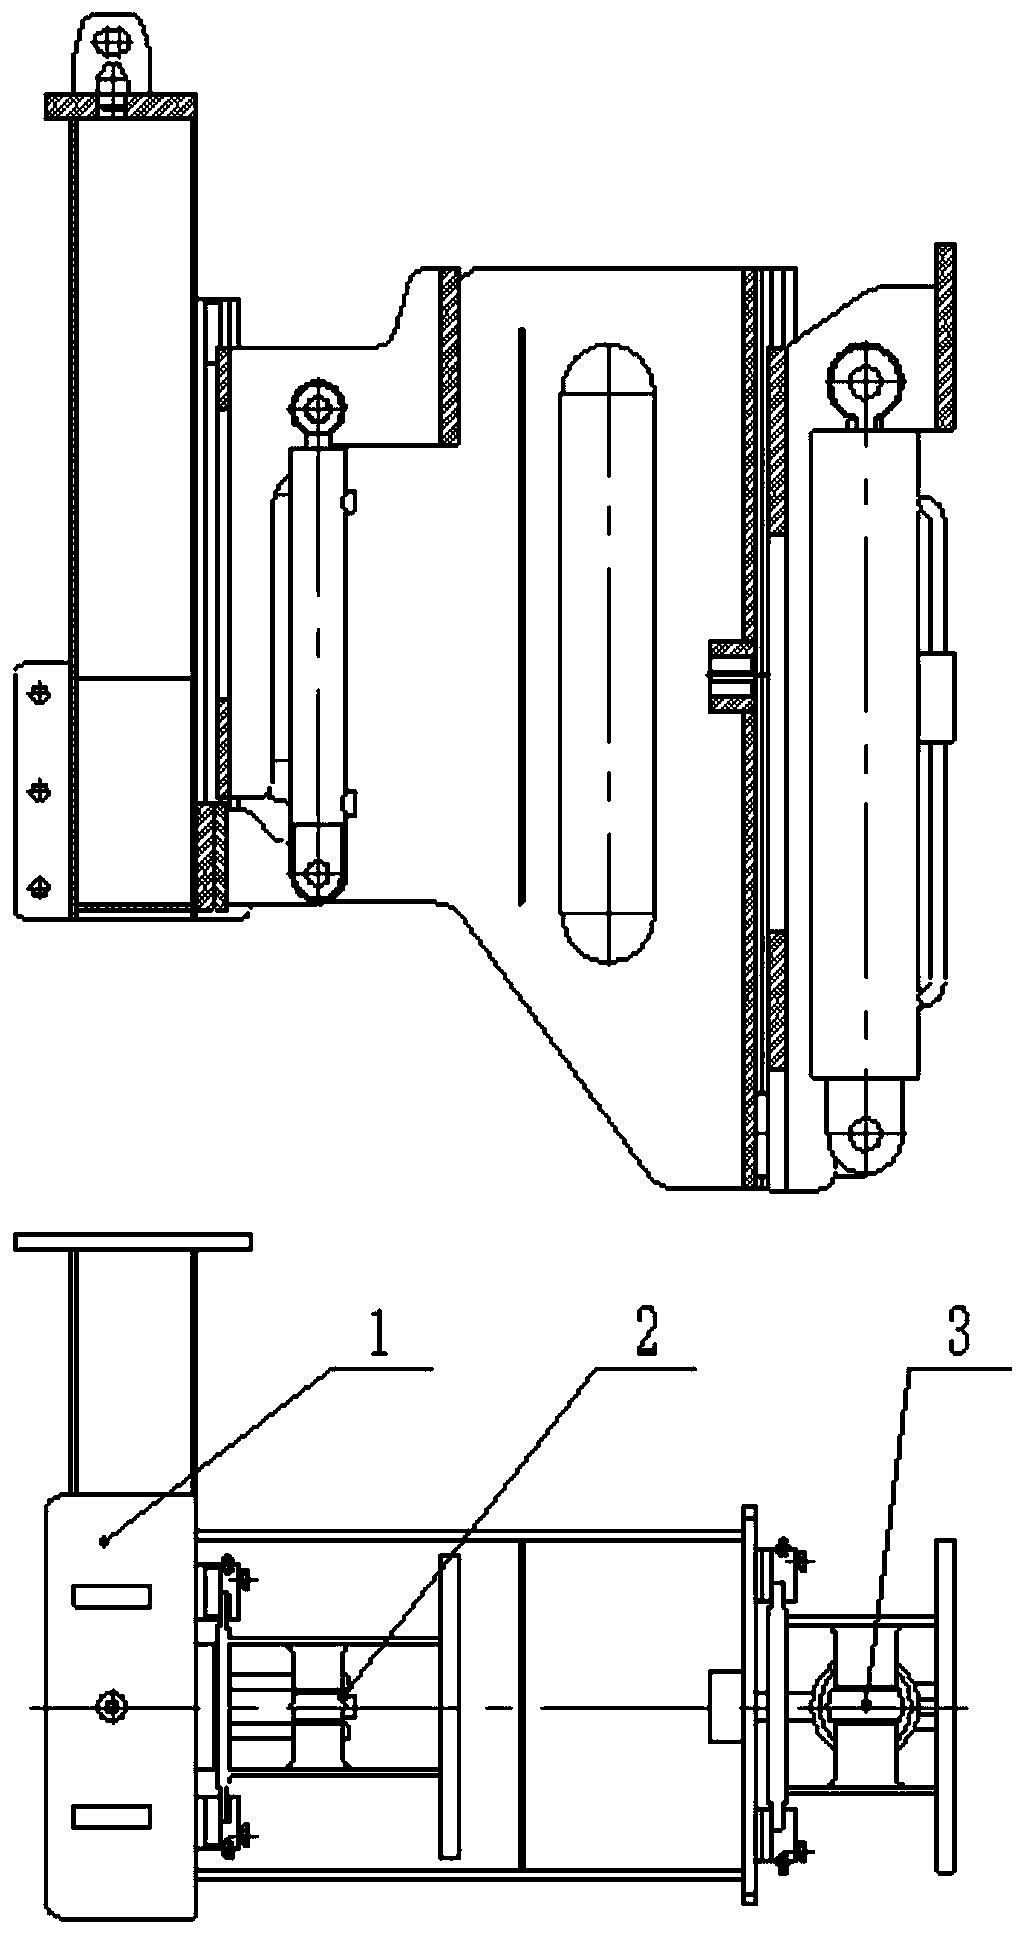 Double-layer rod feeding box automatic rod feeding device